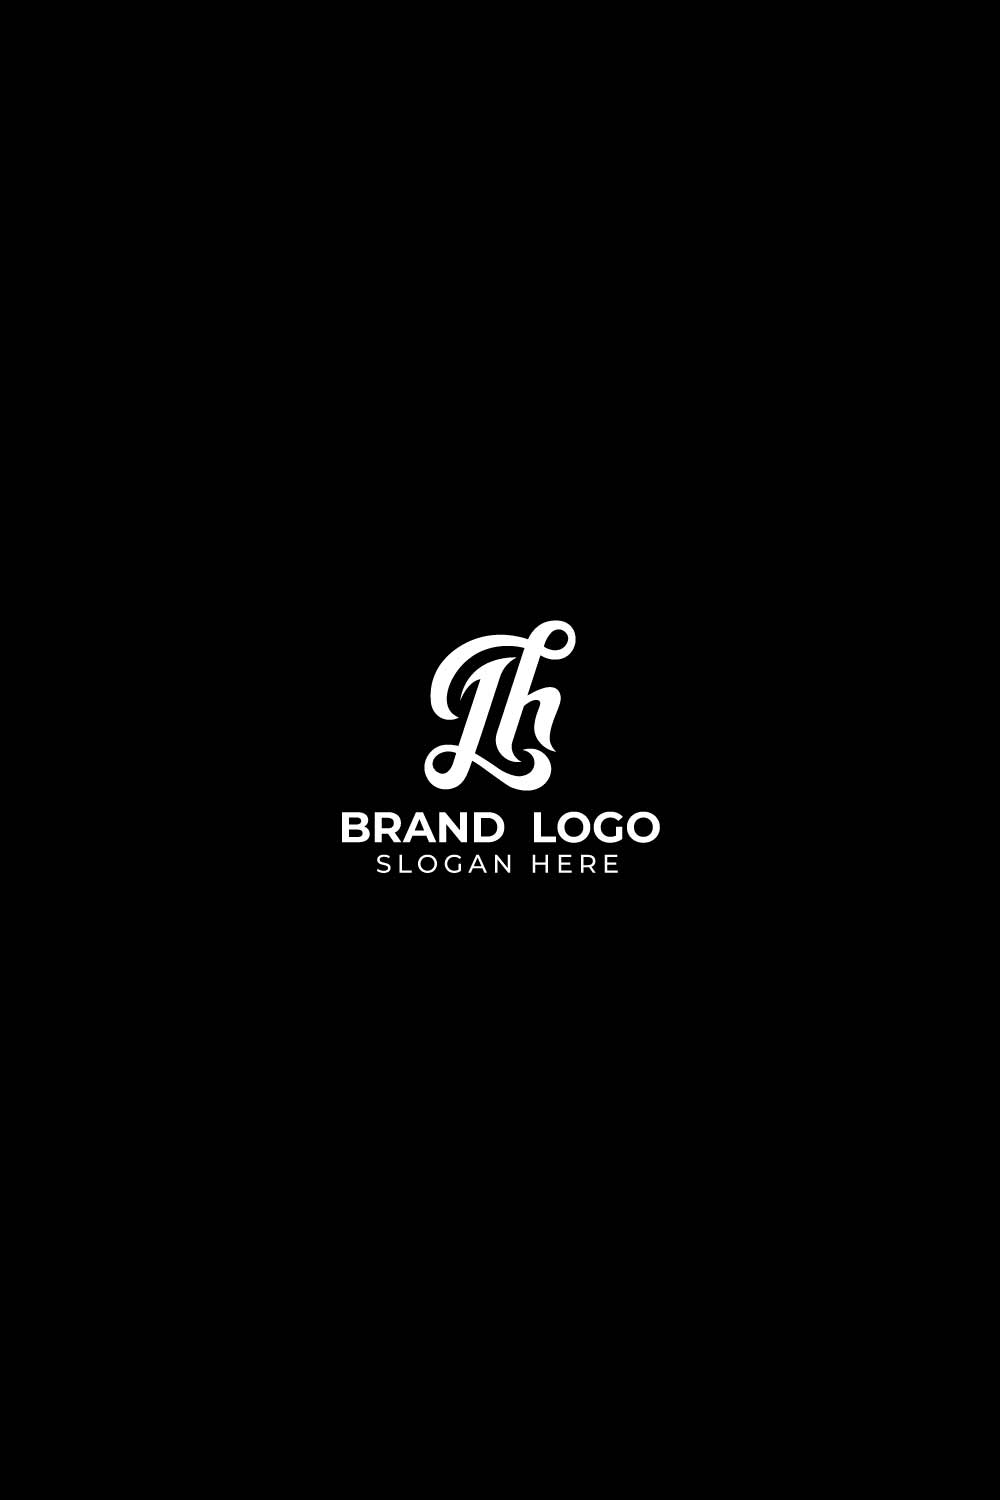 Professional Letter LH logo design pinterest preview image.